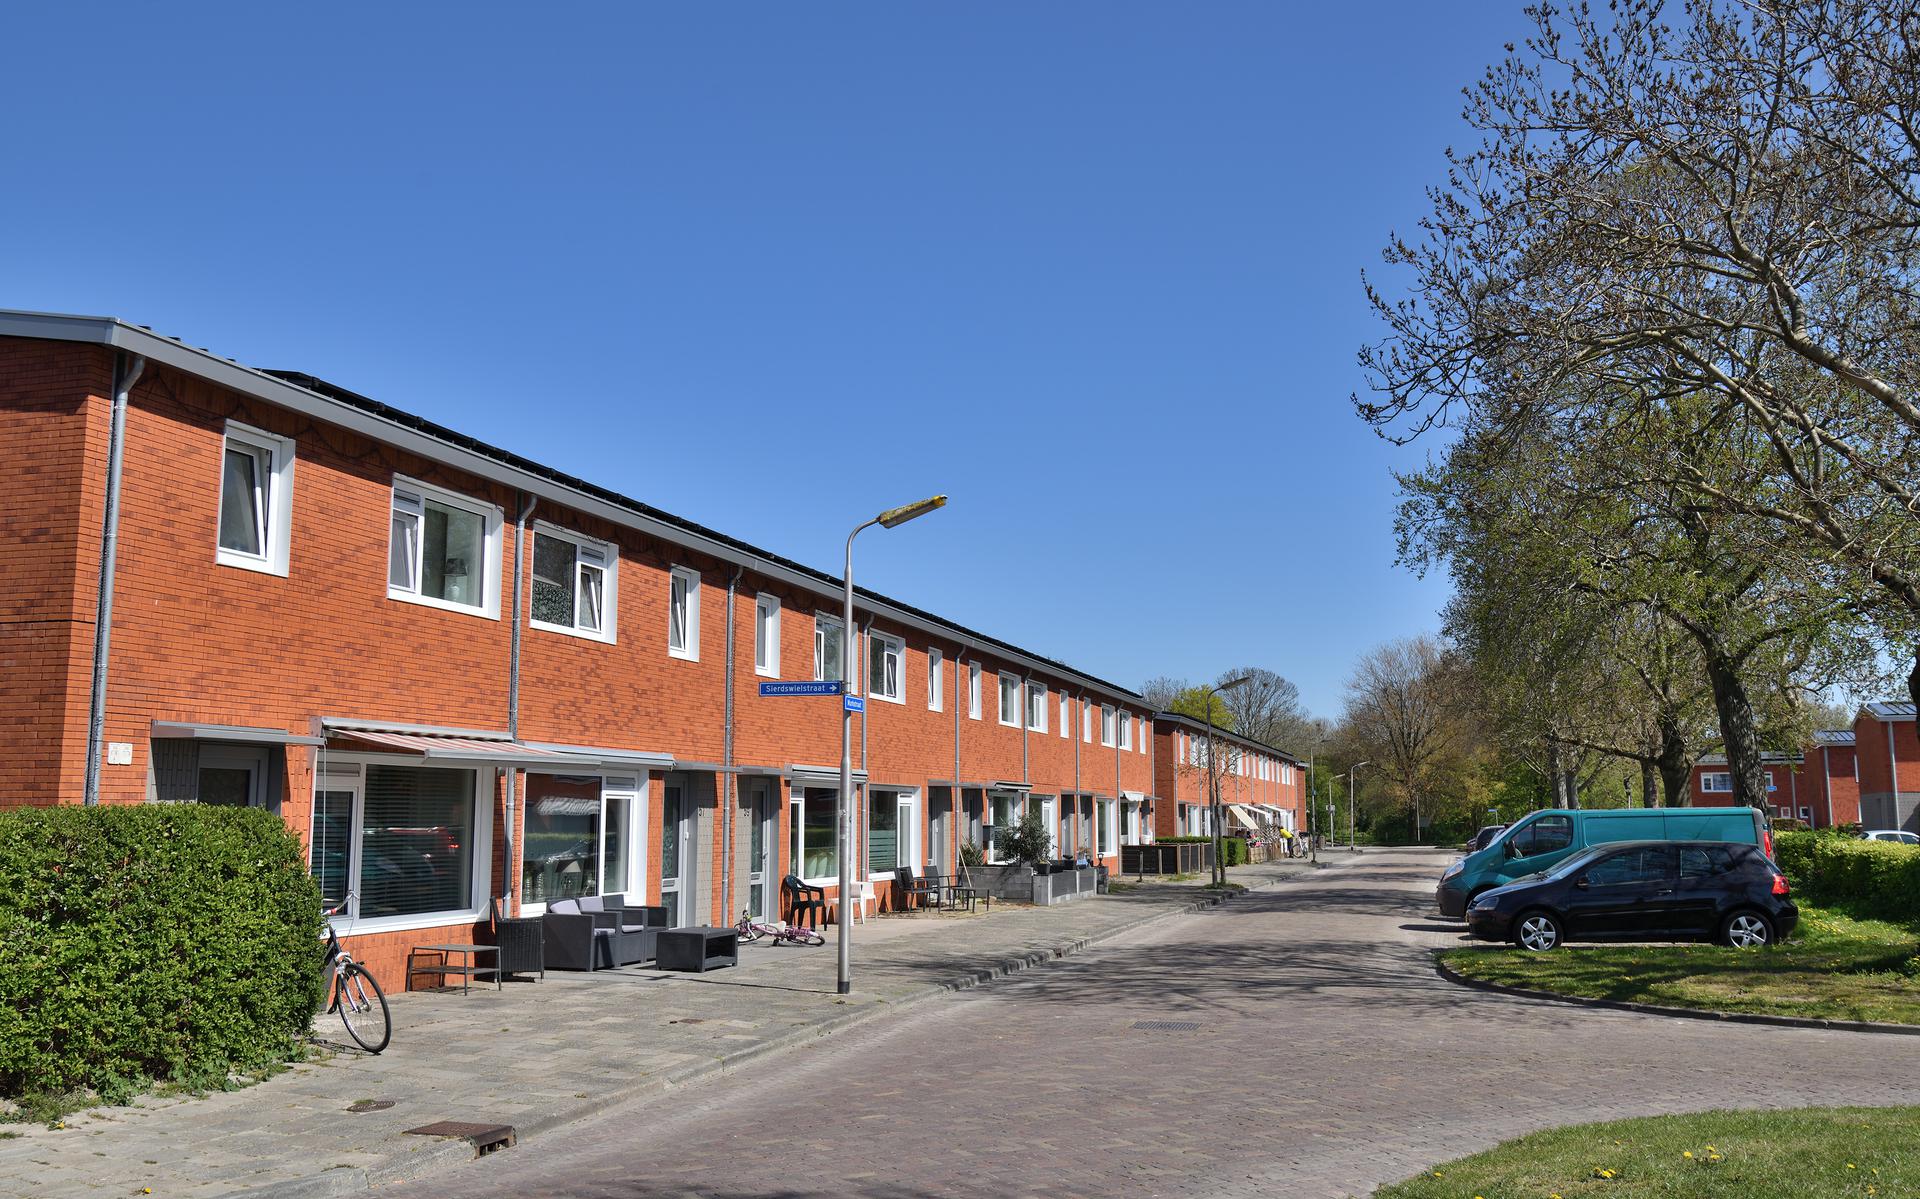 Woningen aan de Murkstraat in Leeuwarden.